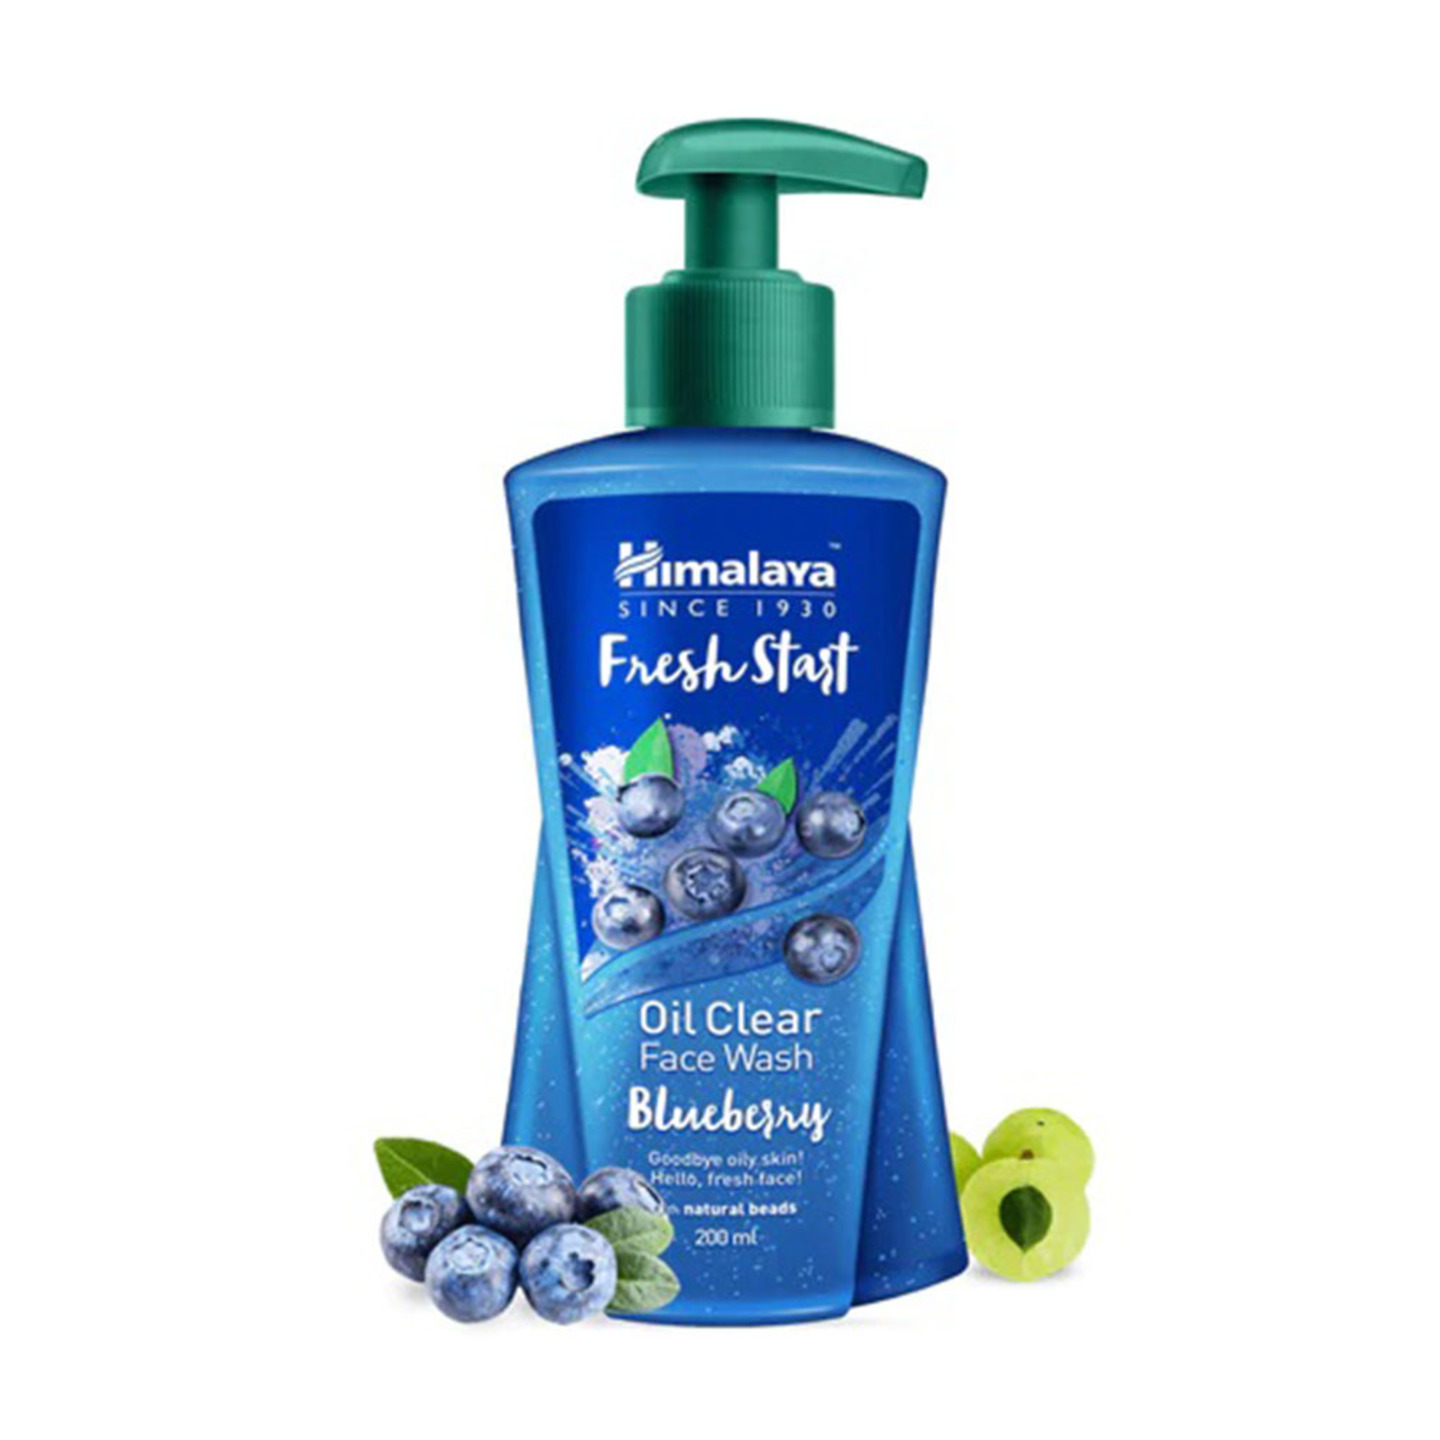 Fresh Start Oil Clear Face Wash Blueberry 200ml